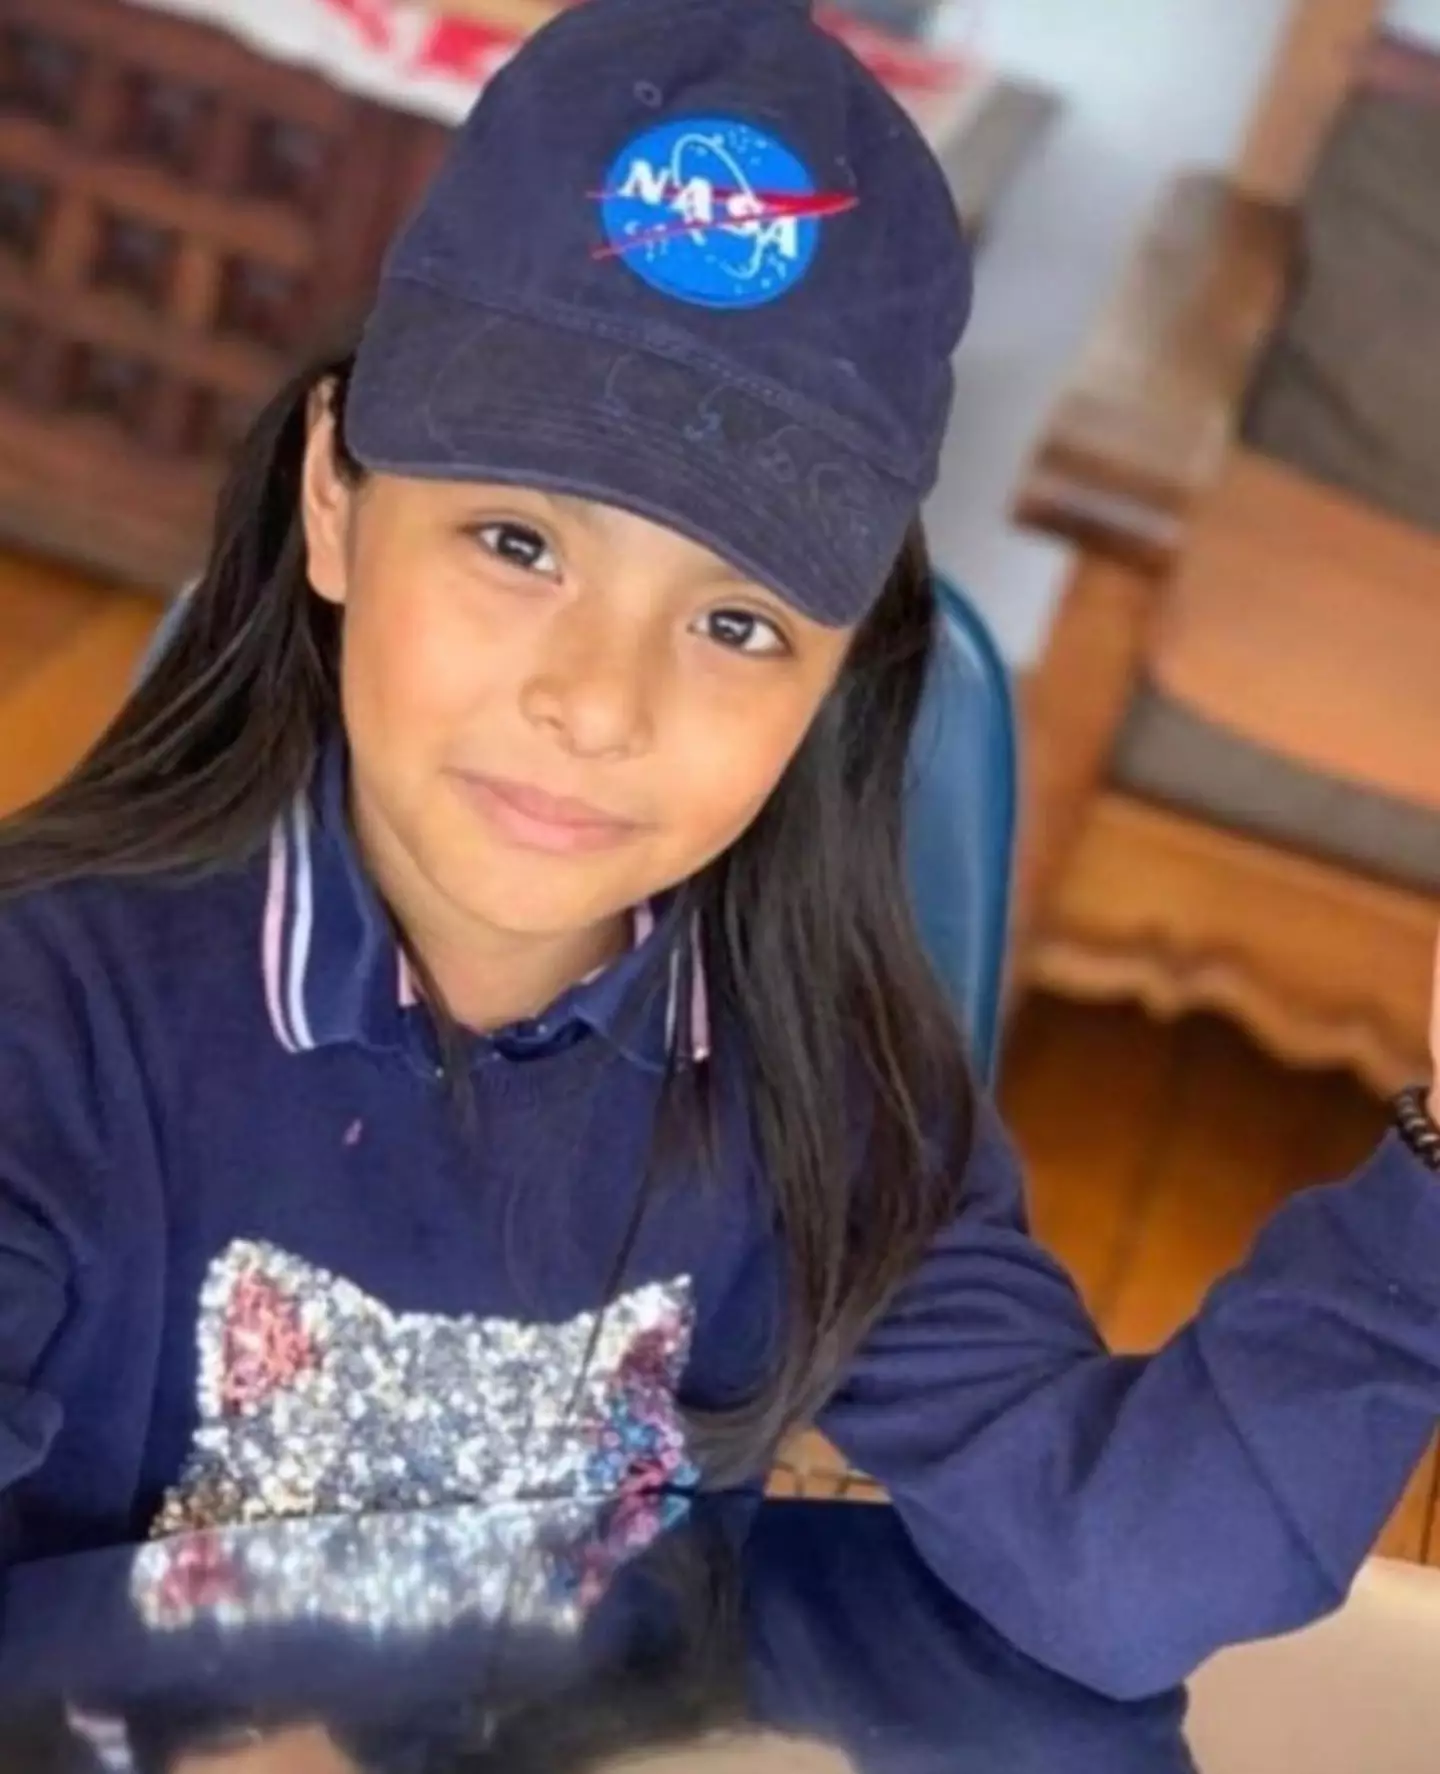 Adhara Maite Pérez Sánchez hopes her studies will lead her to join NASA.